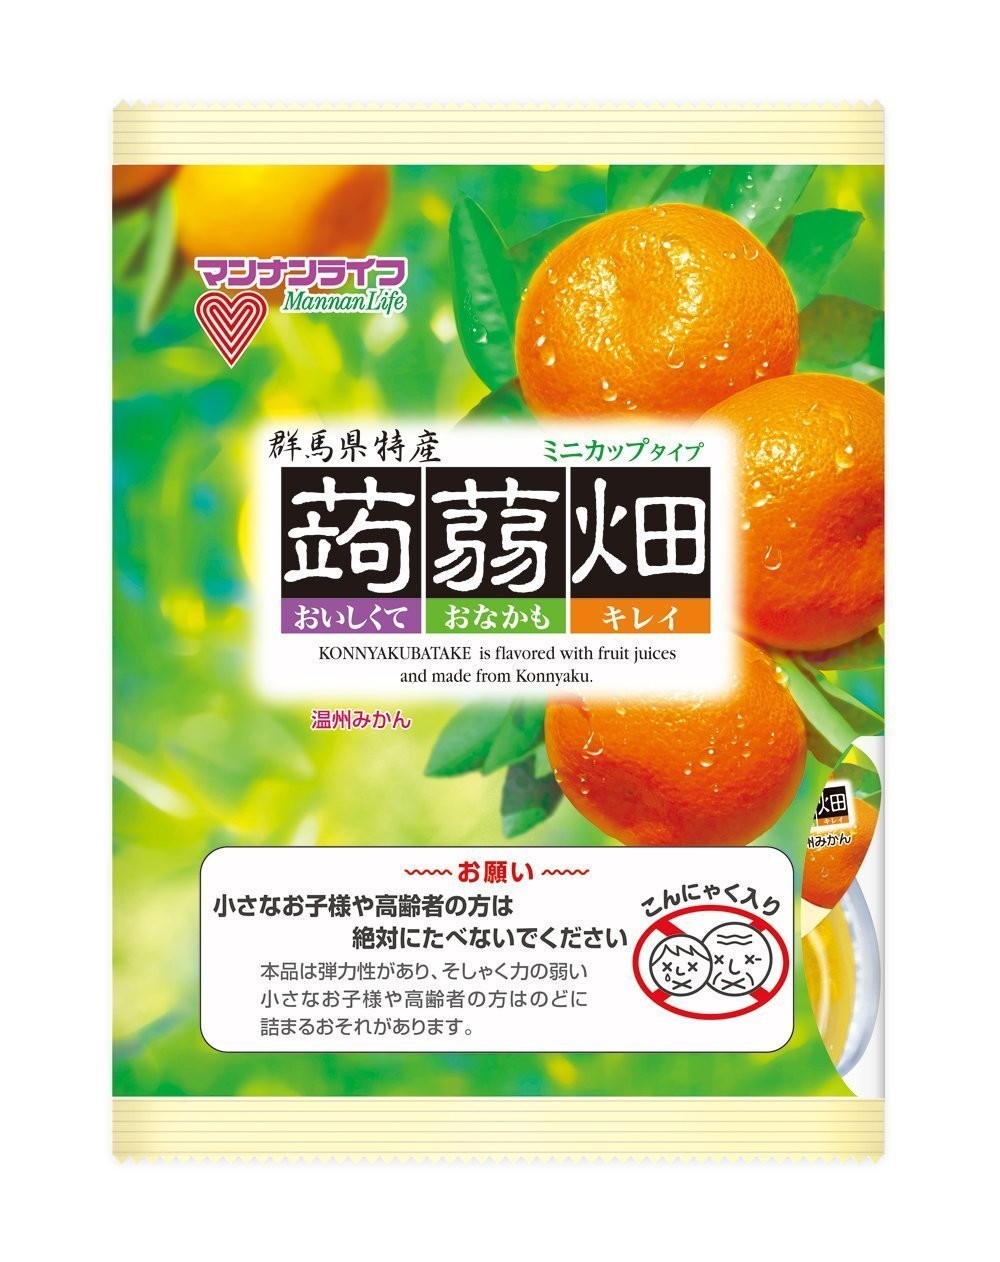 Mannan Life "Konnyaku Batake, Mandarin orange, mikan. flavor" Konjac Fruits Jelly, 25g x 12 pc